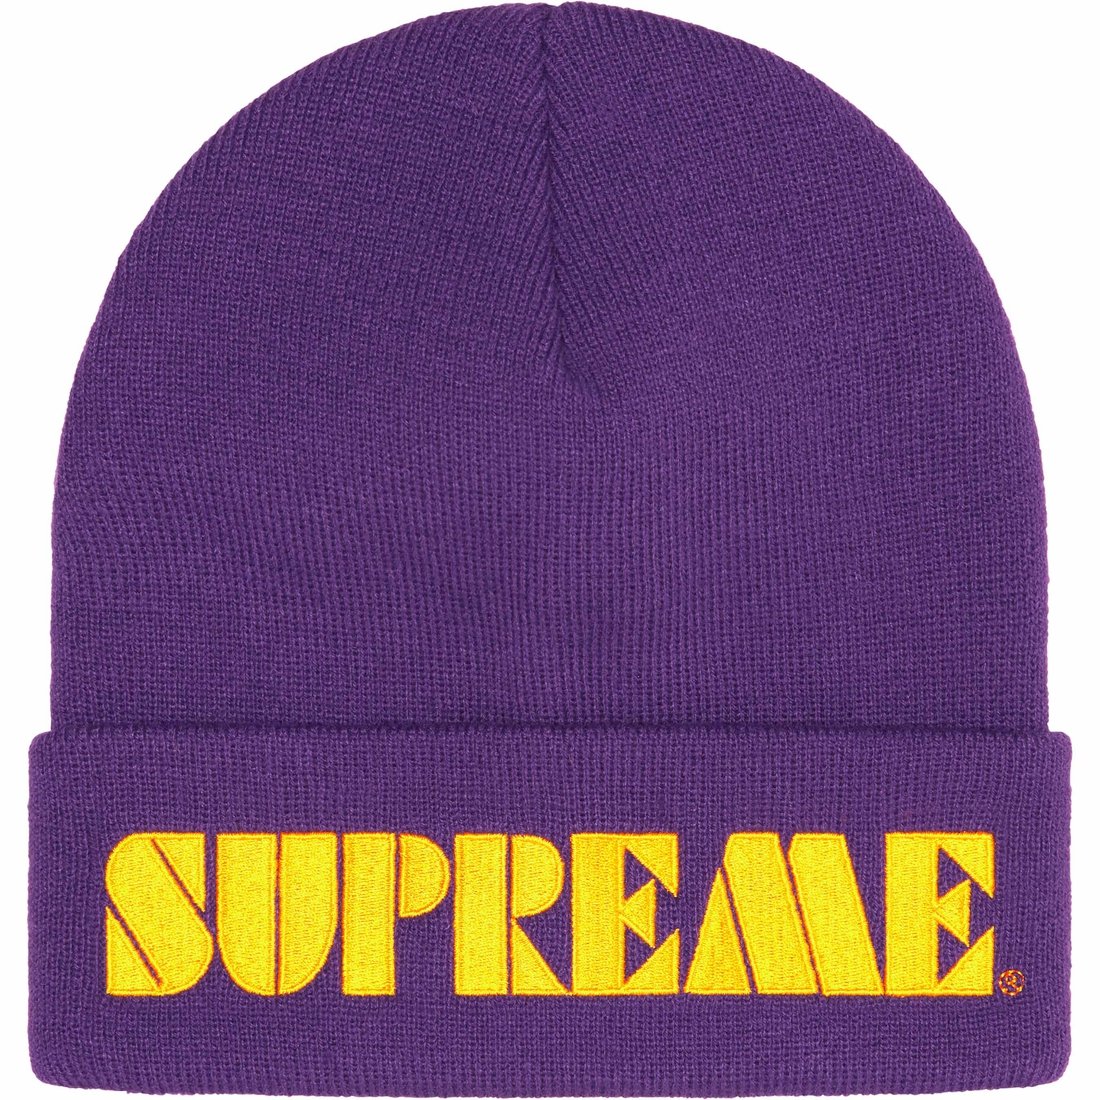 Supreme Stencil Beanie Purple